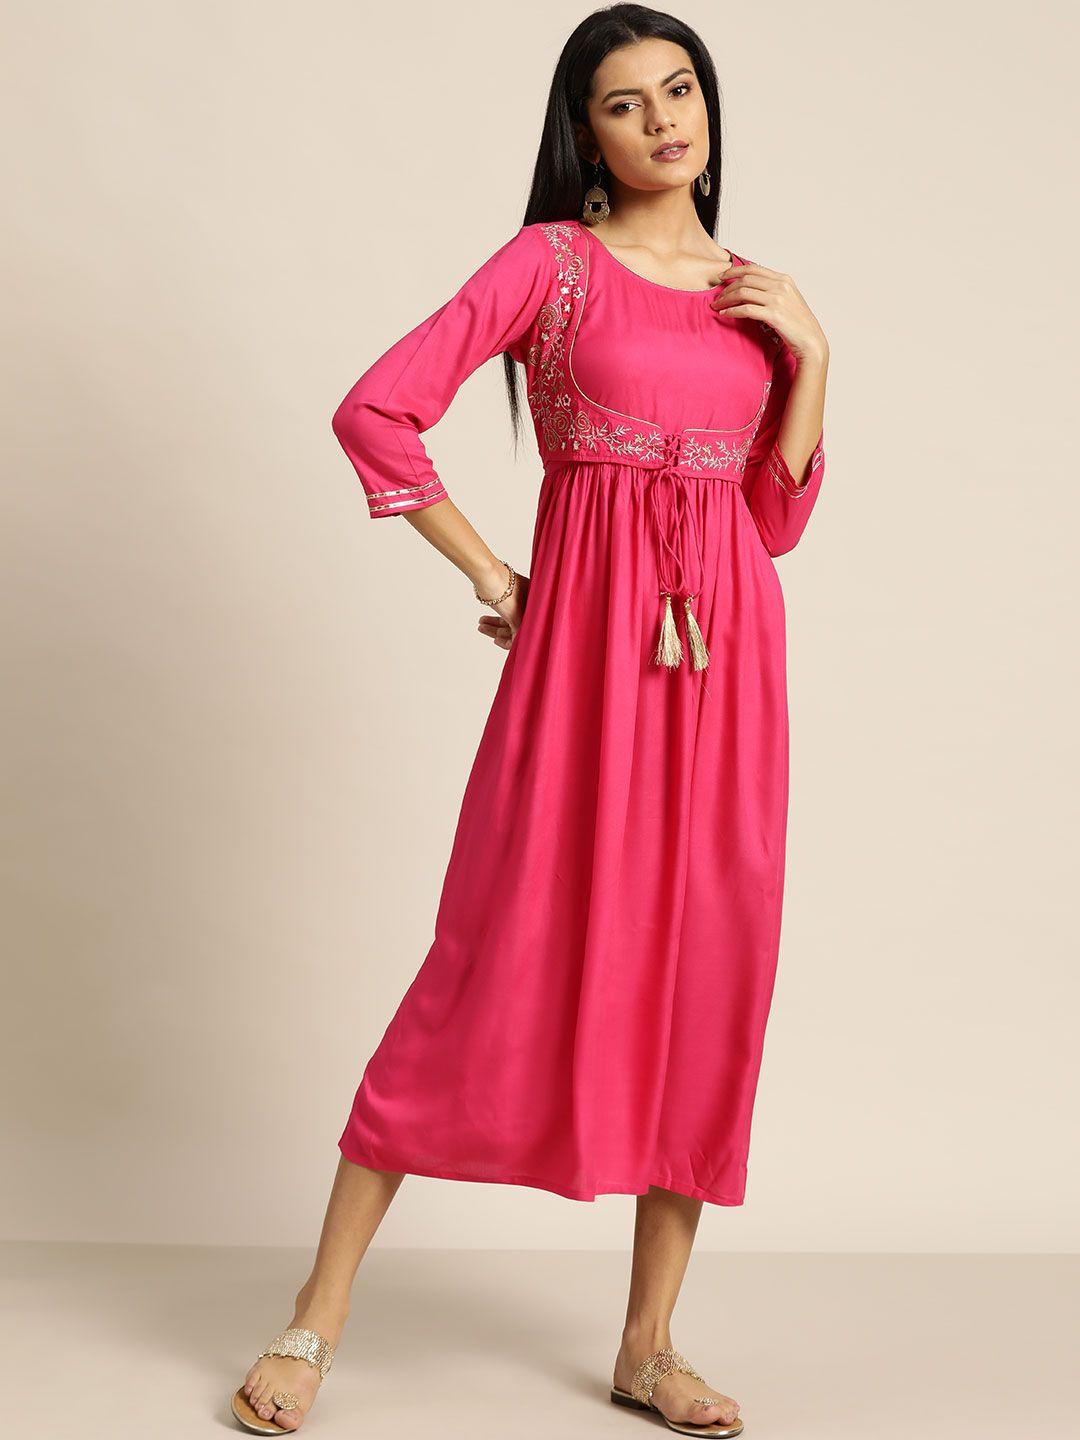 shae by sassafras pink zari embroidered detail layered liva a-line midi dress